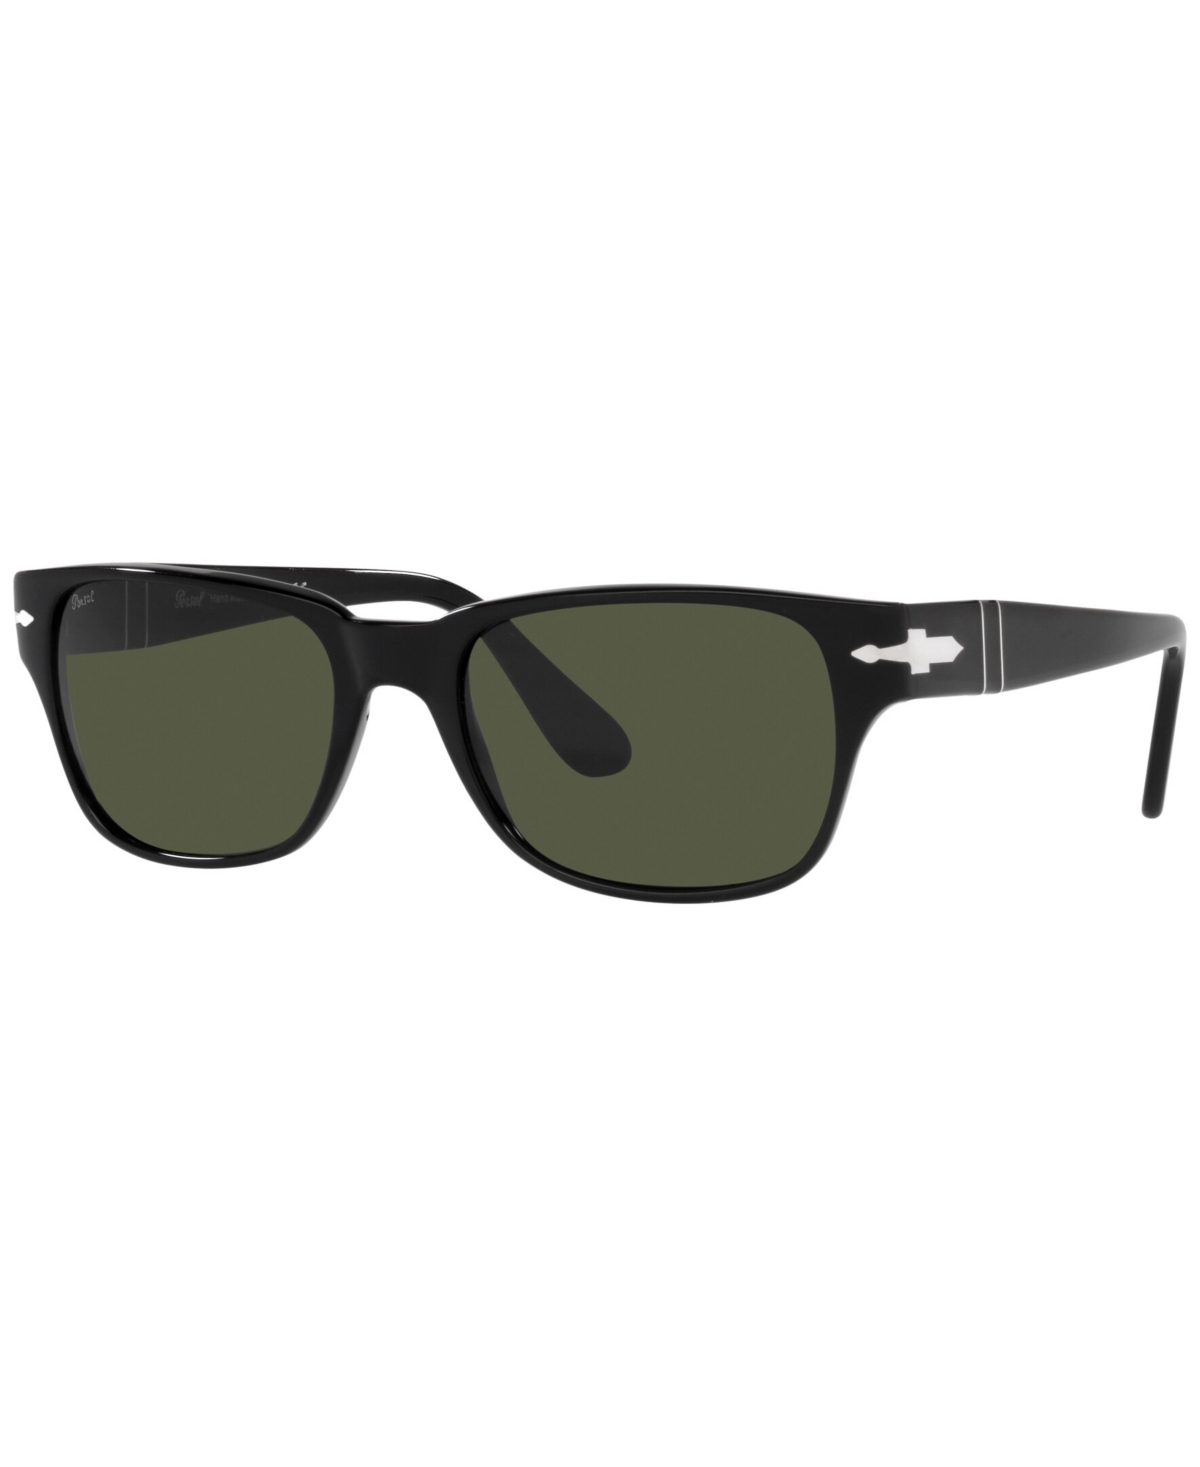 Men's Sunglasses, PO3288S 55 - Black